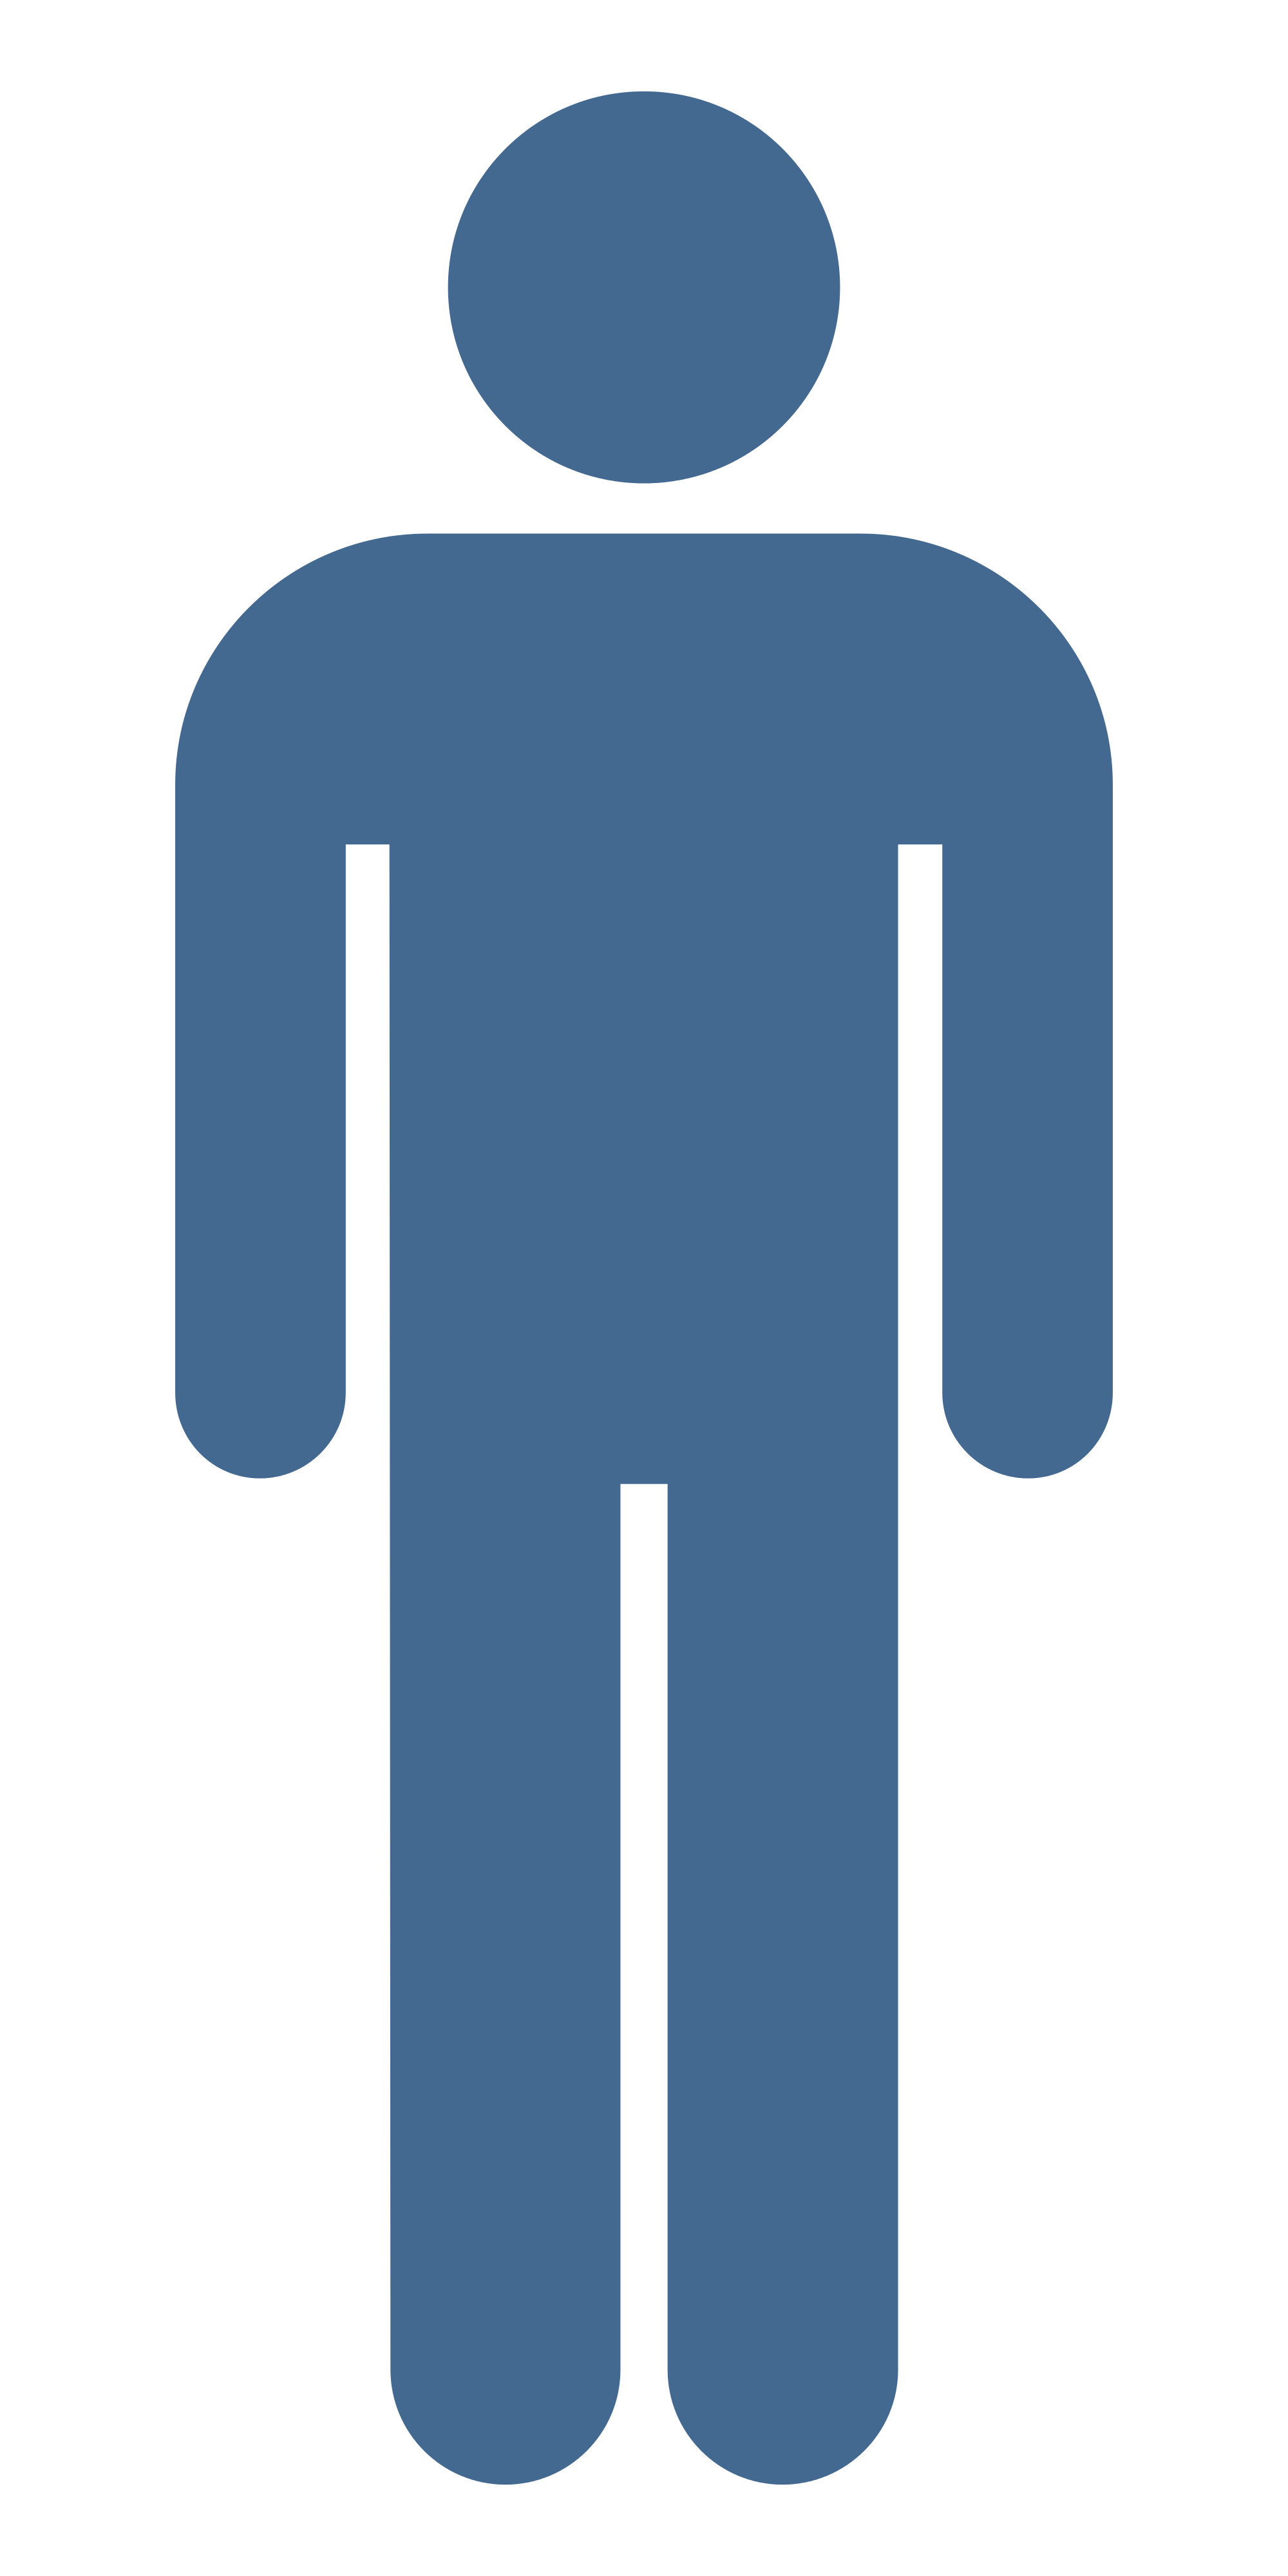 File:Blue person pictogram.svg